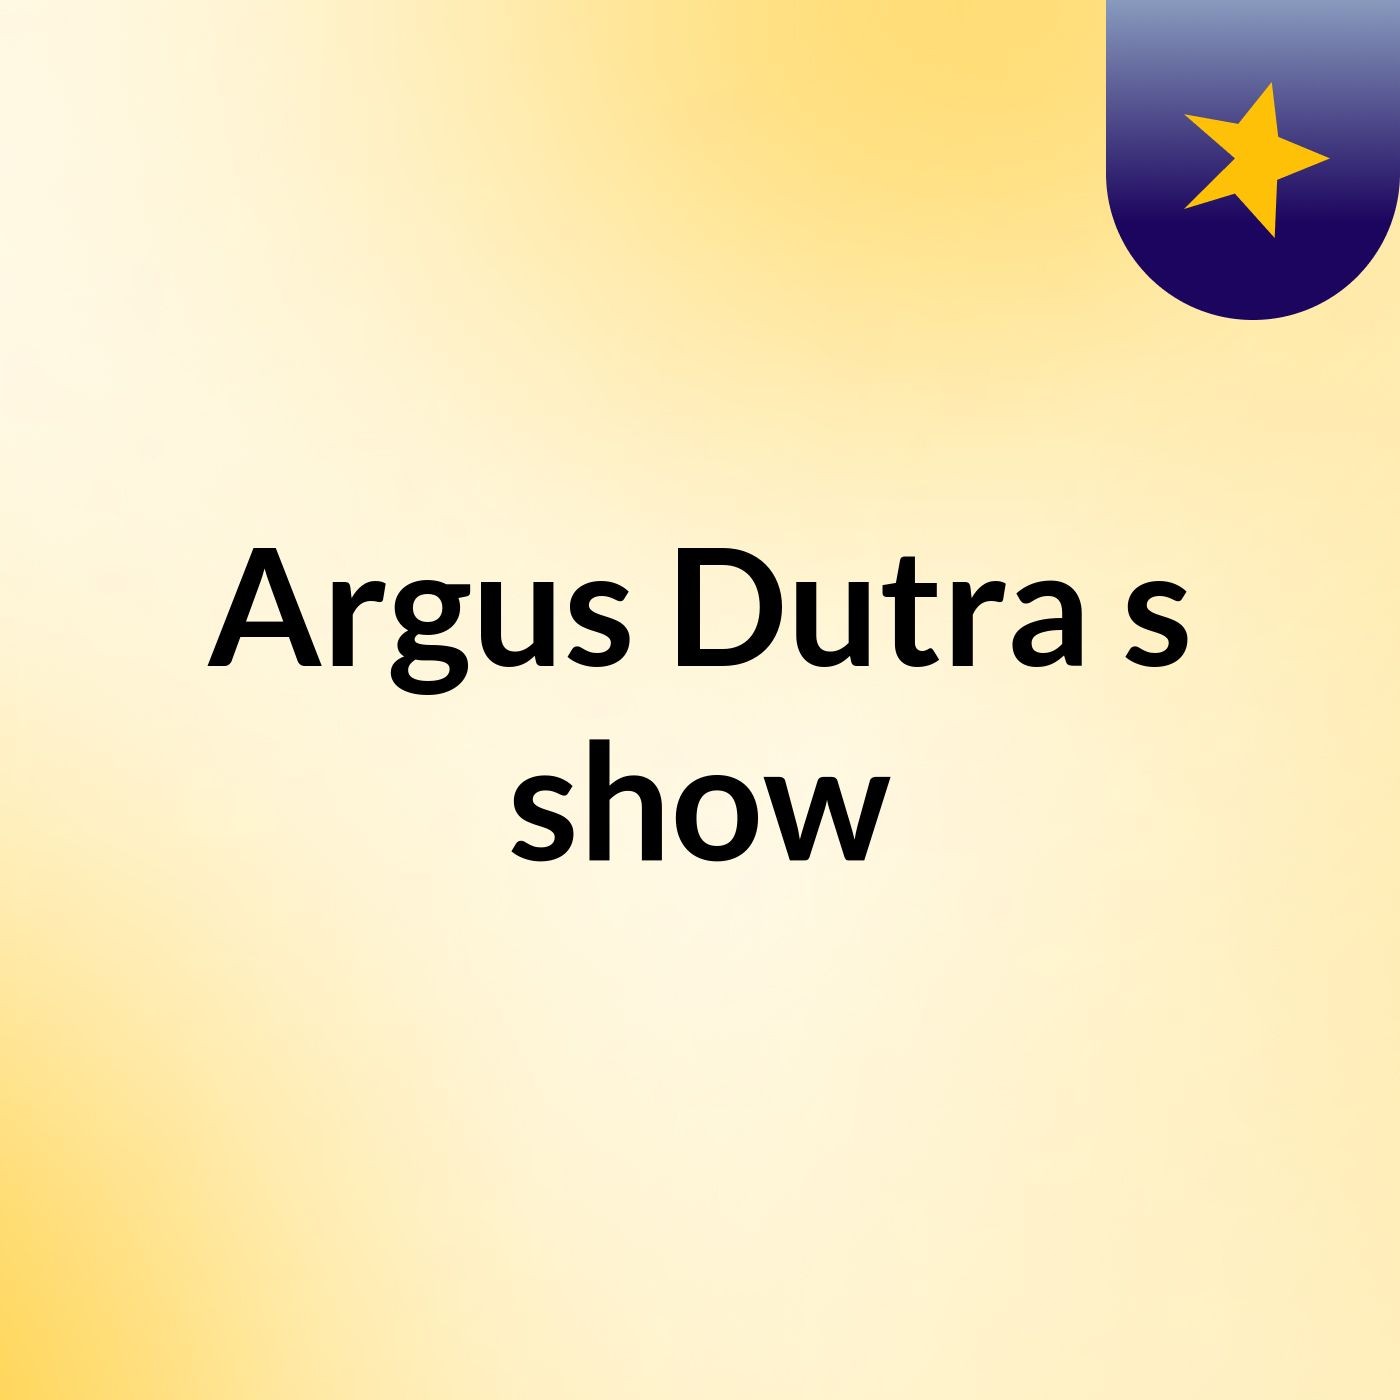 Argus Dutra's show